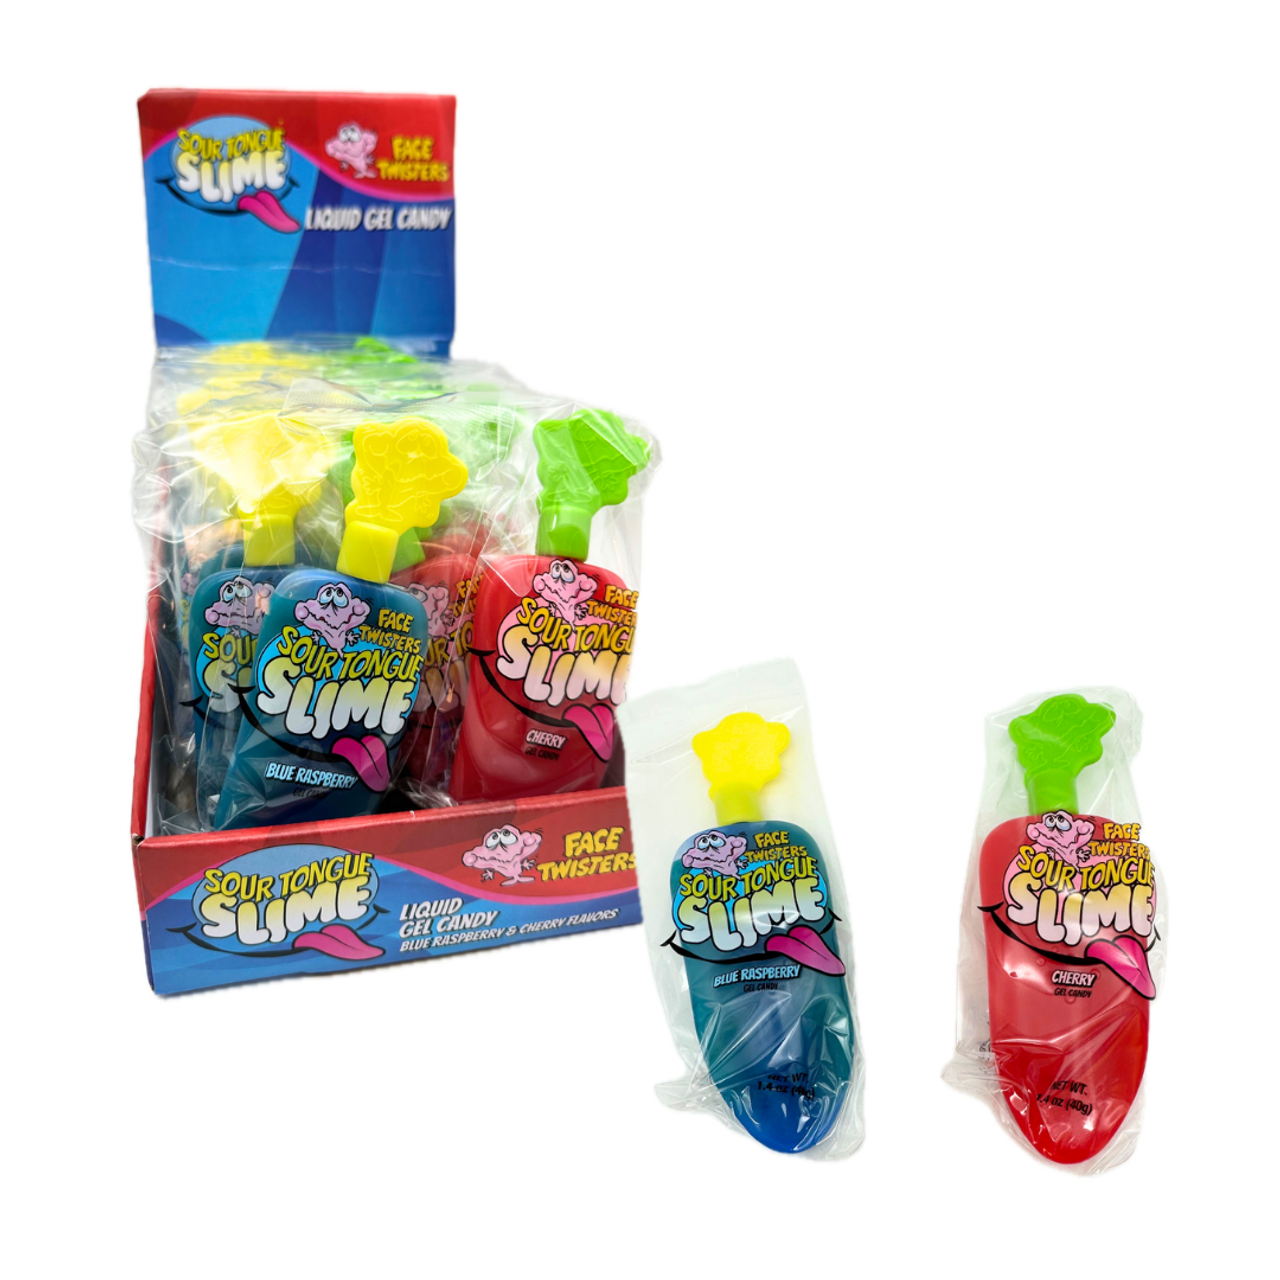 Sour Tongue Slime Liquid Gel Candy - Cherry / Blue Raspberry - 1.4oz